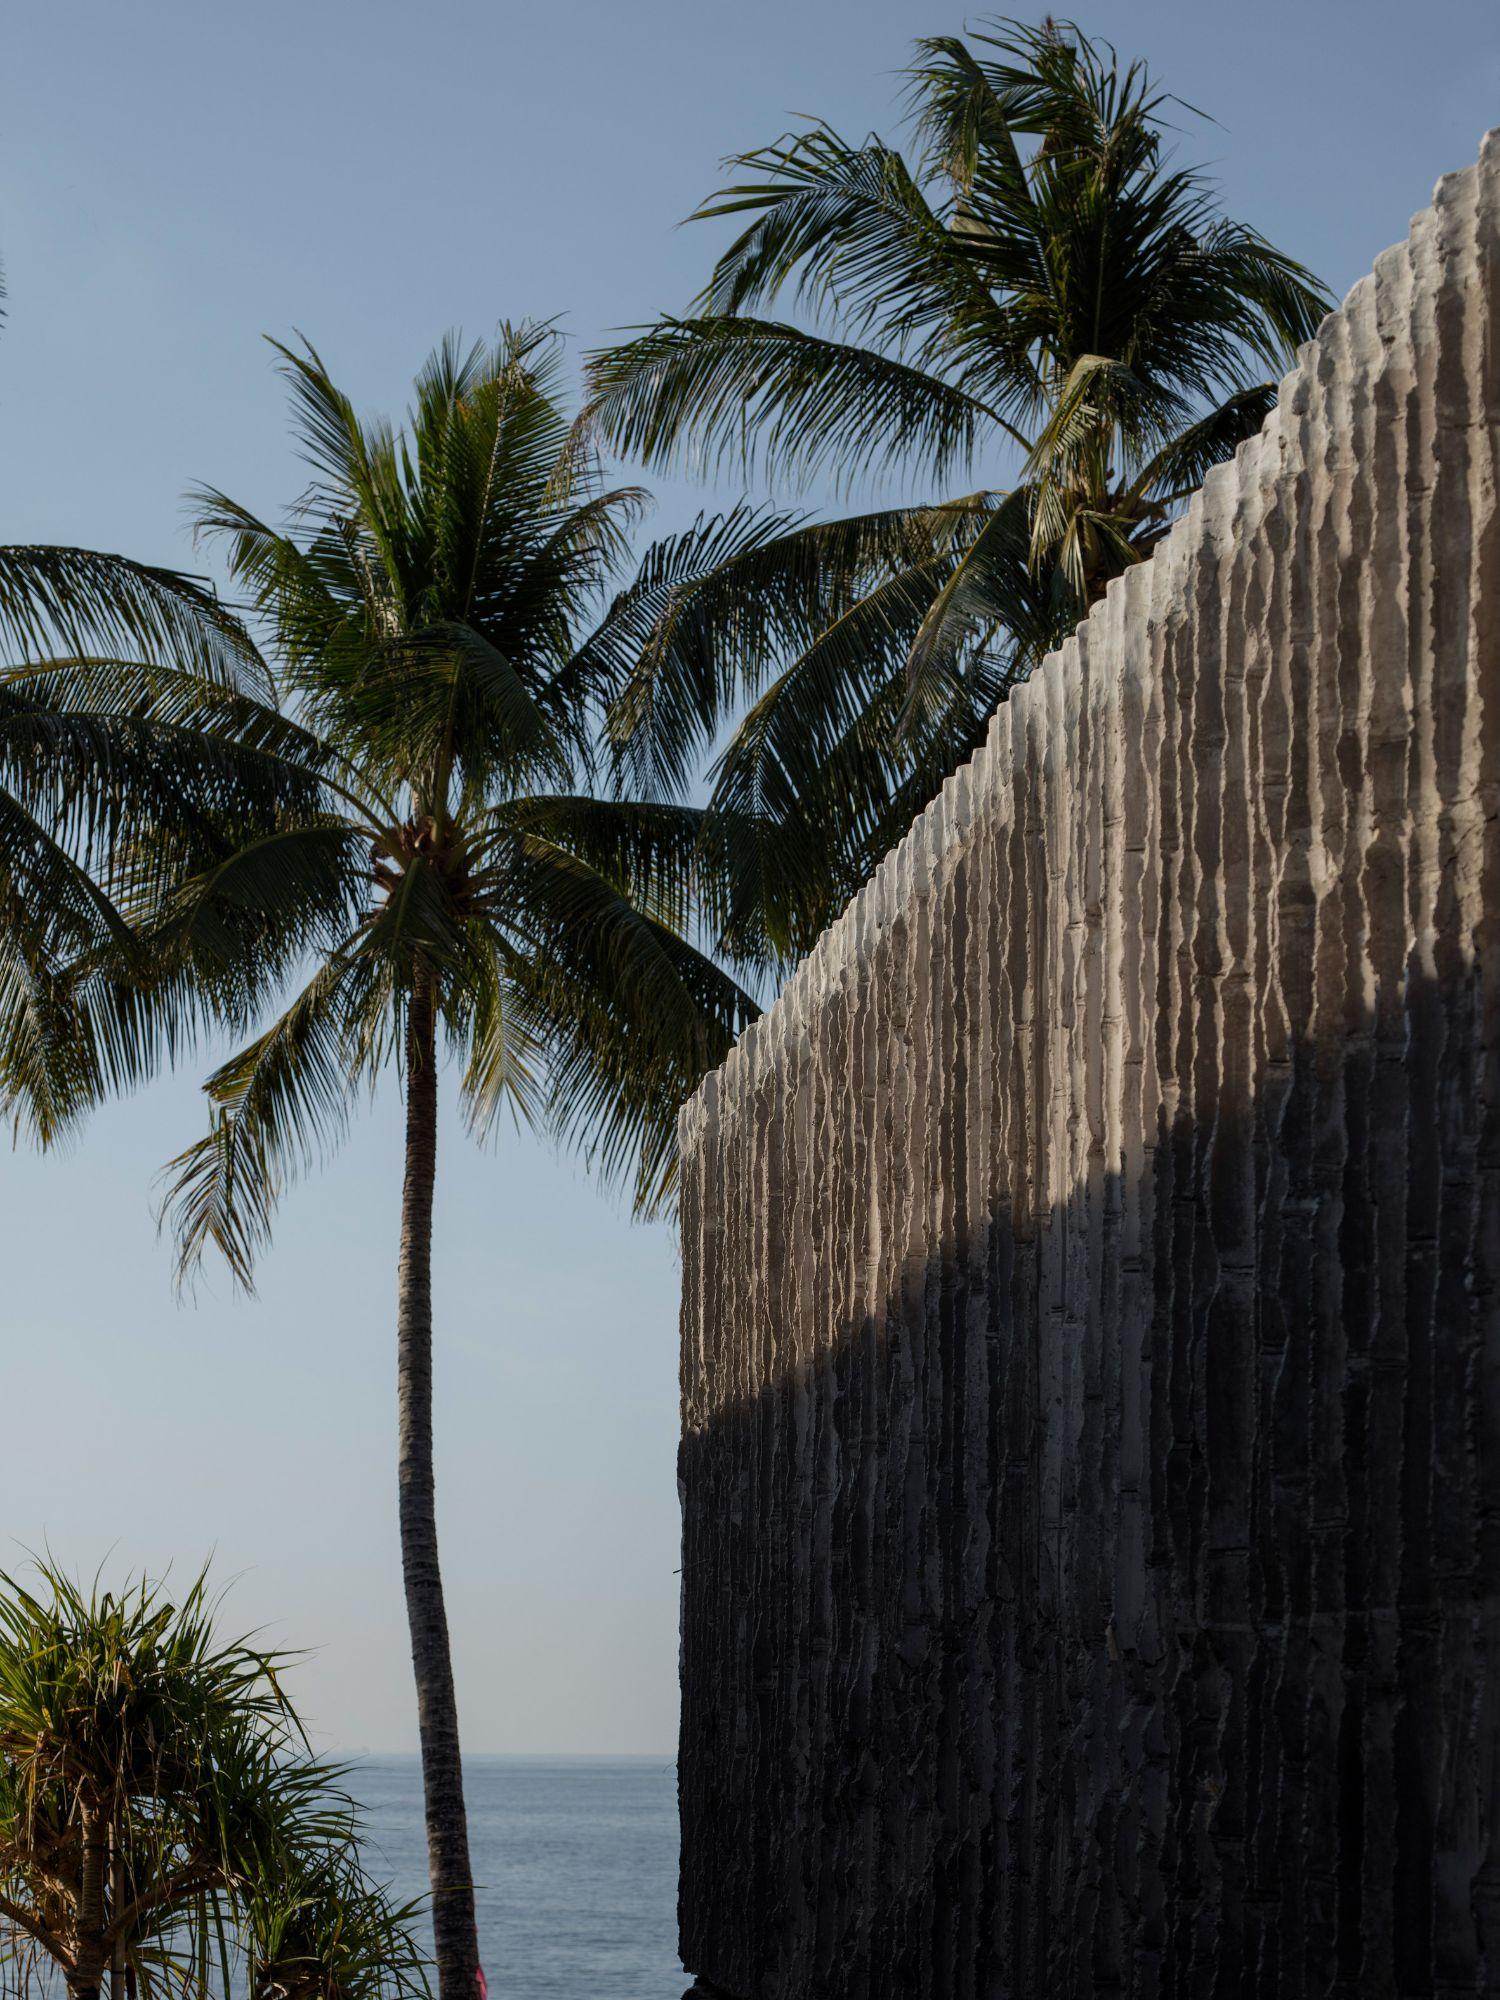 The Tiing Tejakula Villas in Bali by Nic Brunsdon + Manguning